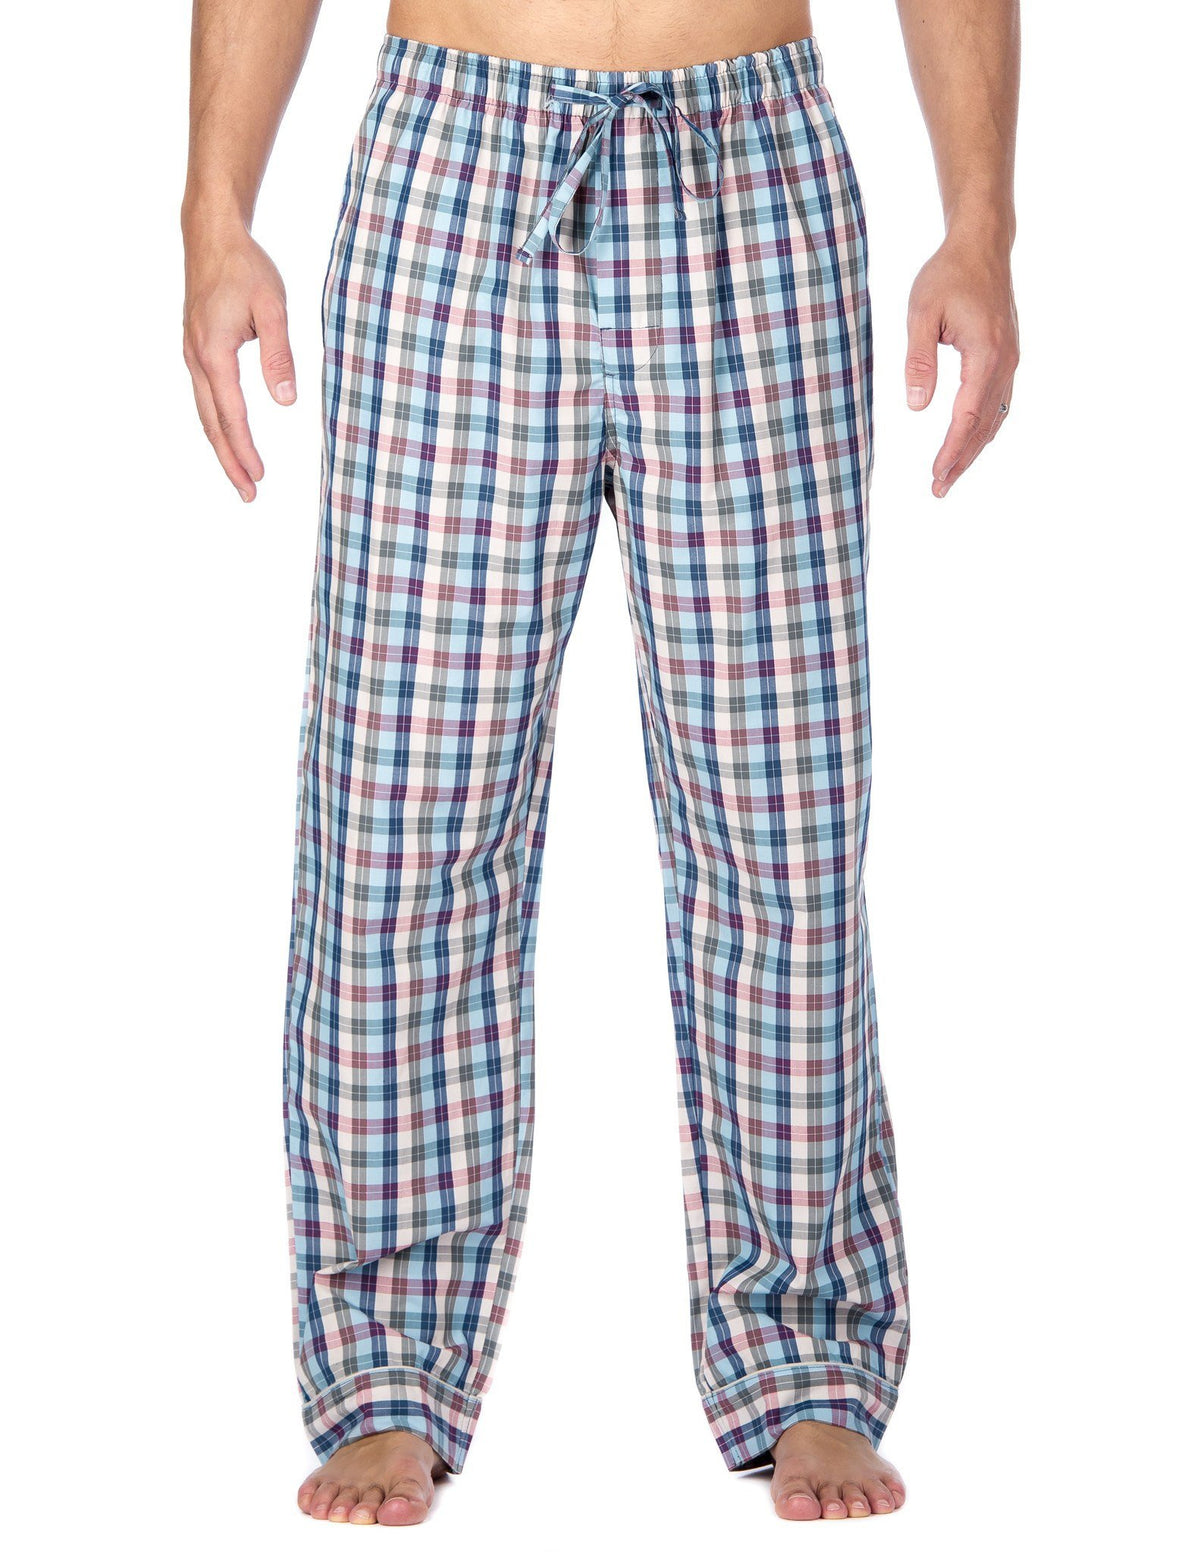 Men's Bamboo Sleep/Lounge Pants - Plaid Red-White-Blue